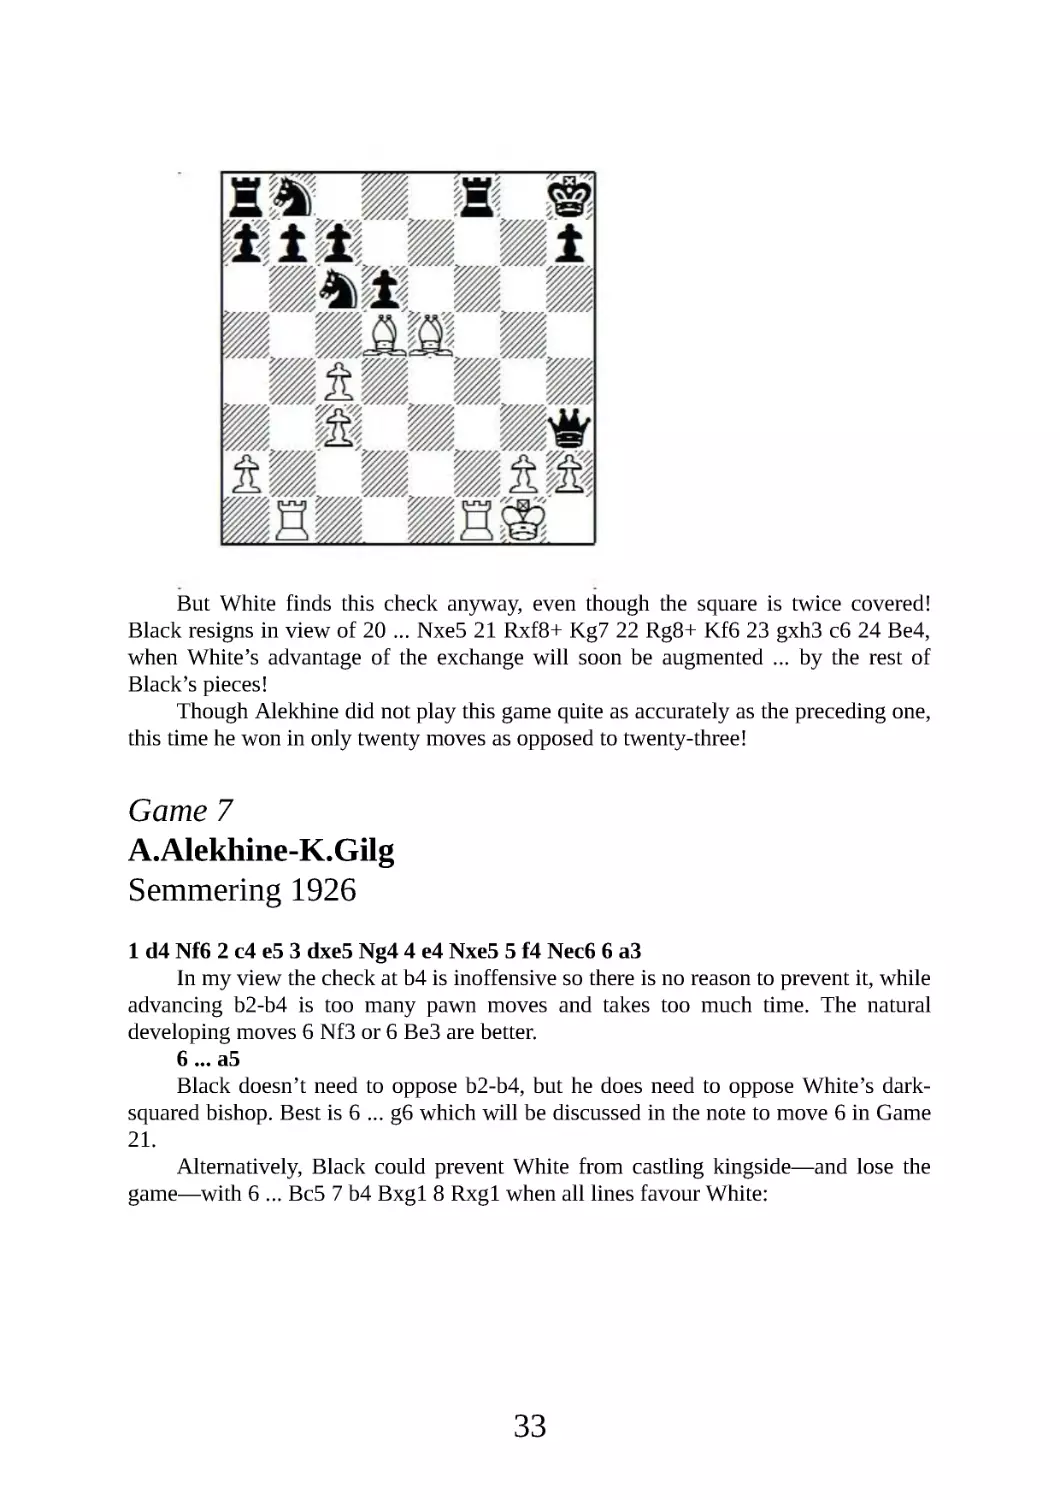 Alekhine.A-Gilg.K, Semmering 1926